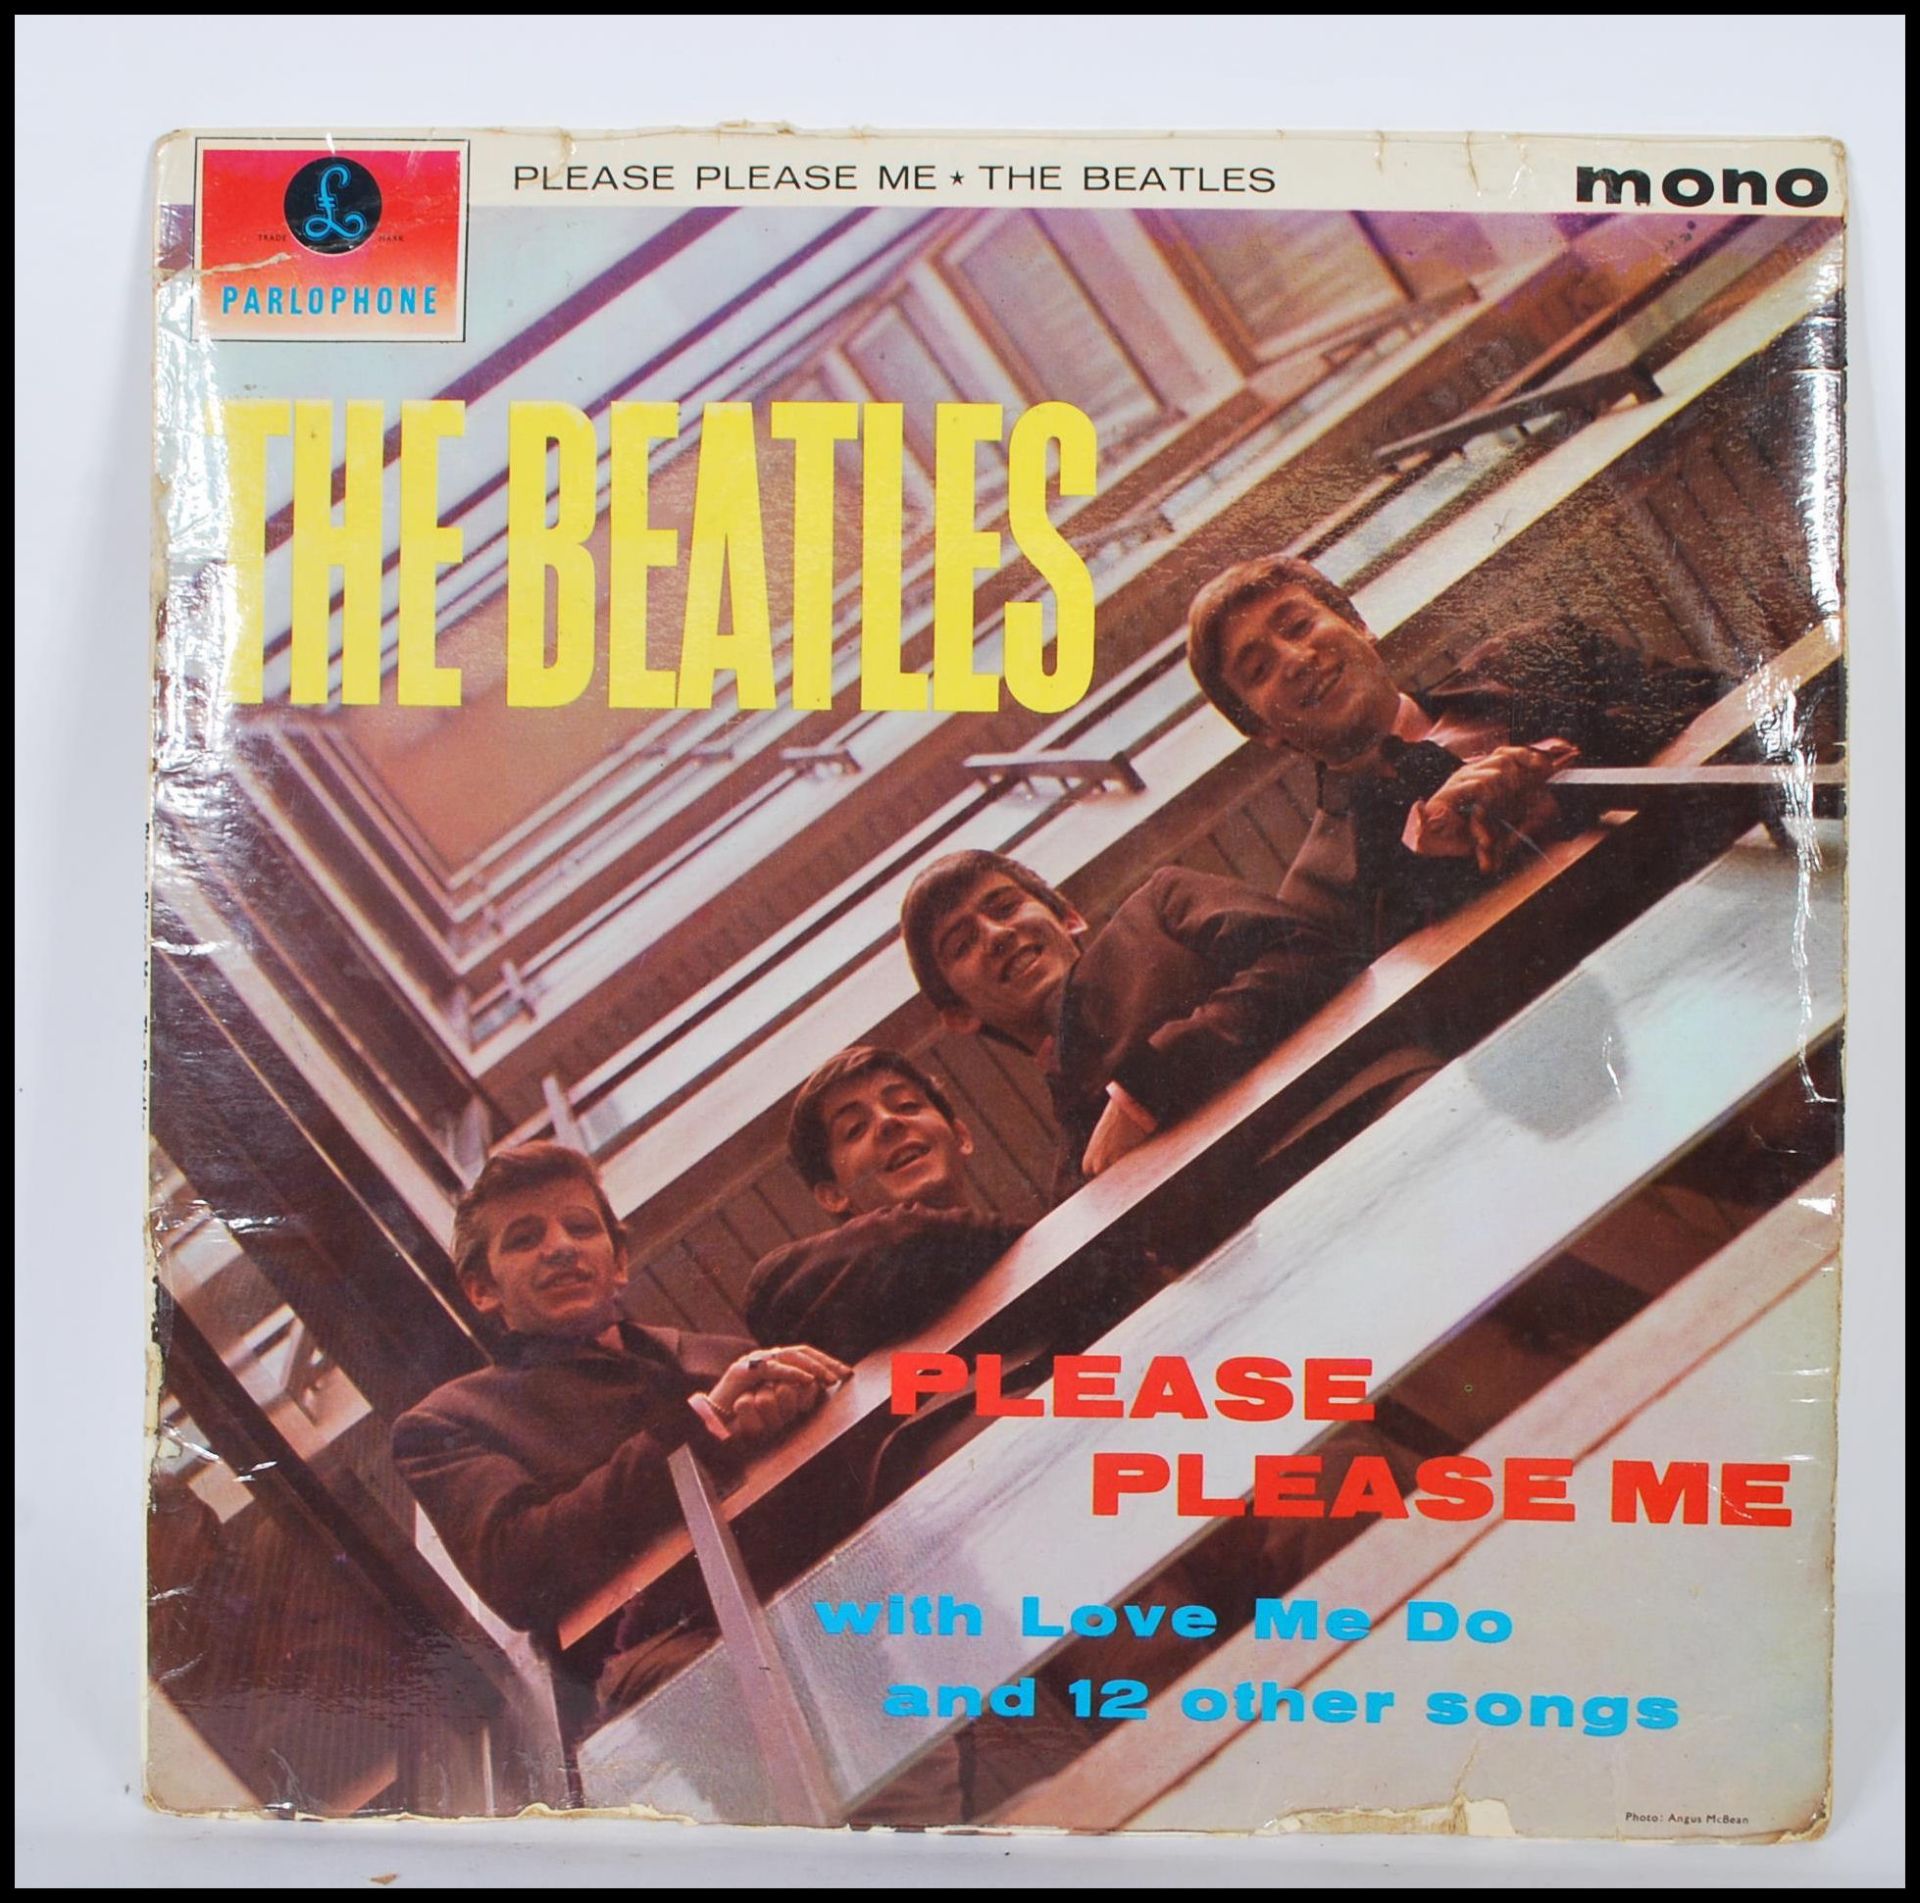 Vinyl long play LP record album by The Beatles - P